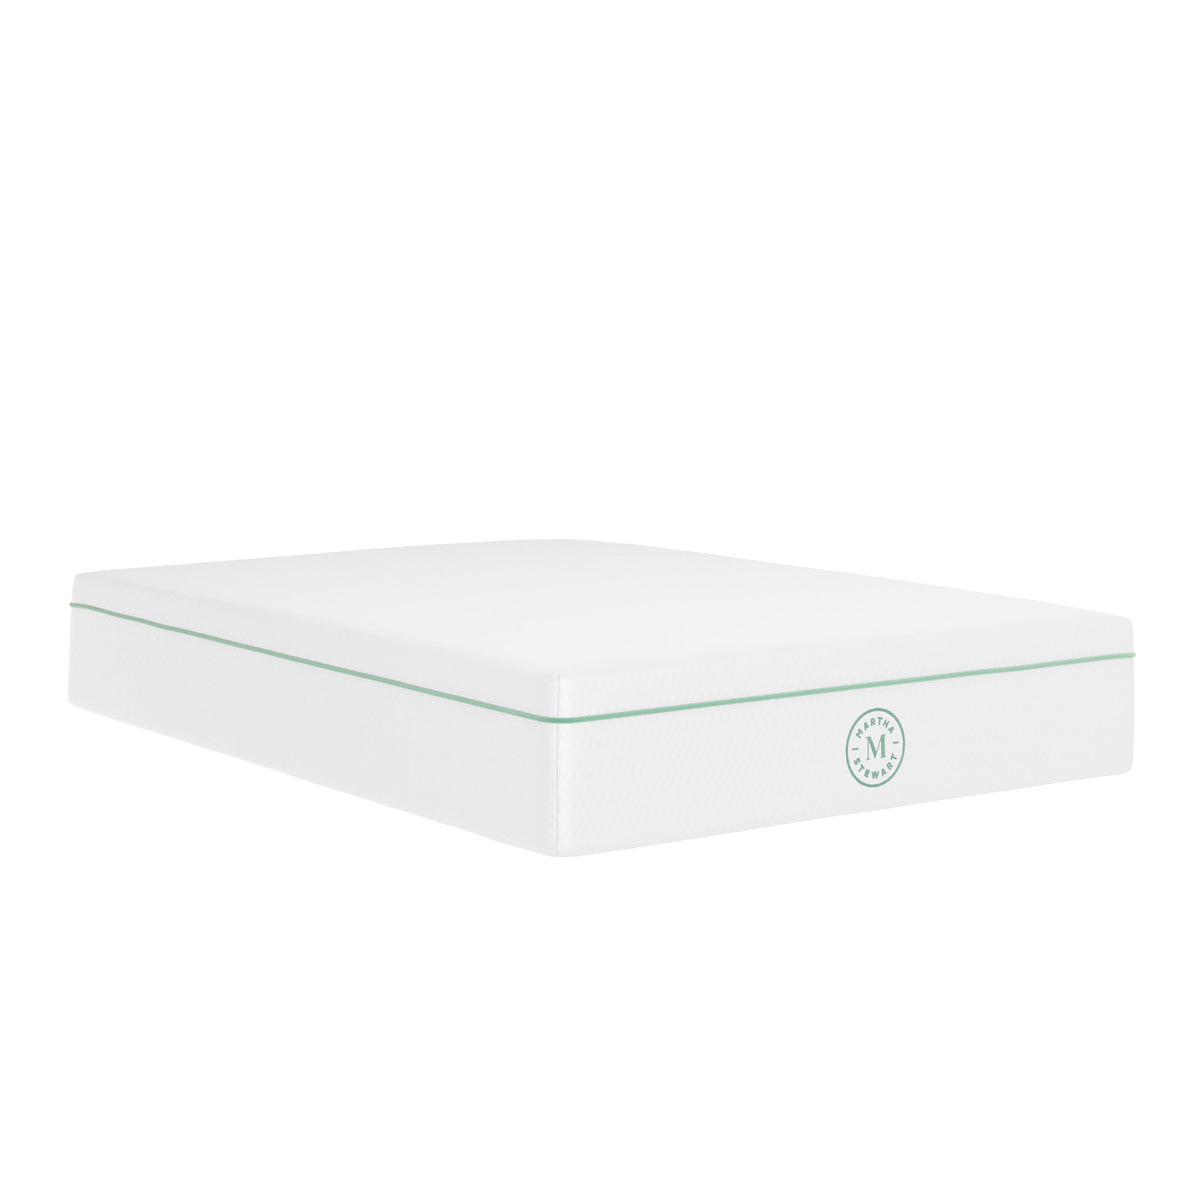 Full |#| Premium Medium-Firm Dual-Action Cooling Memory Foam Mattress in a Box - Full